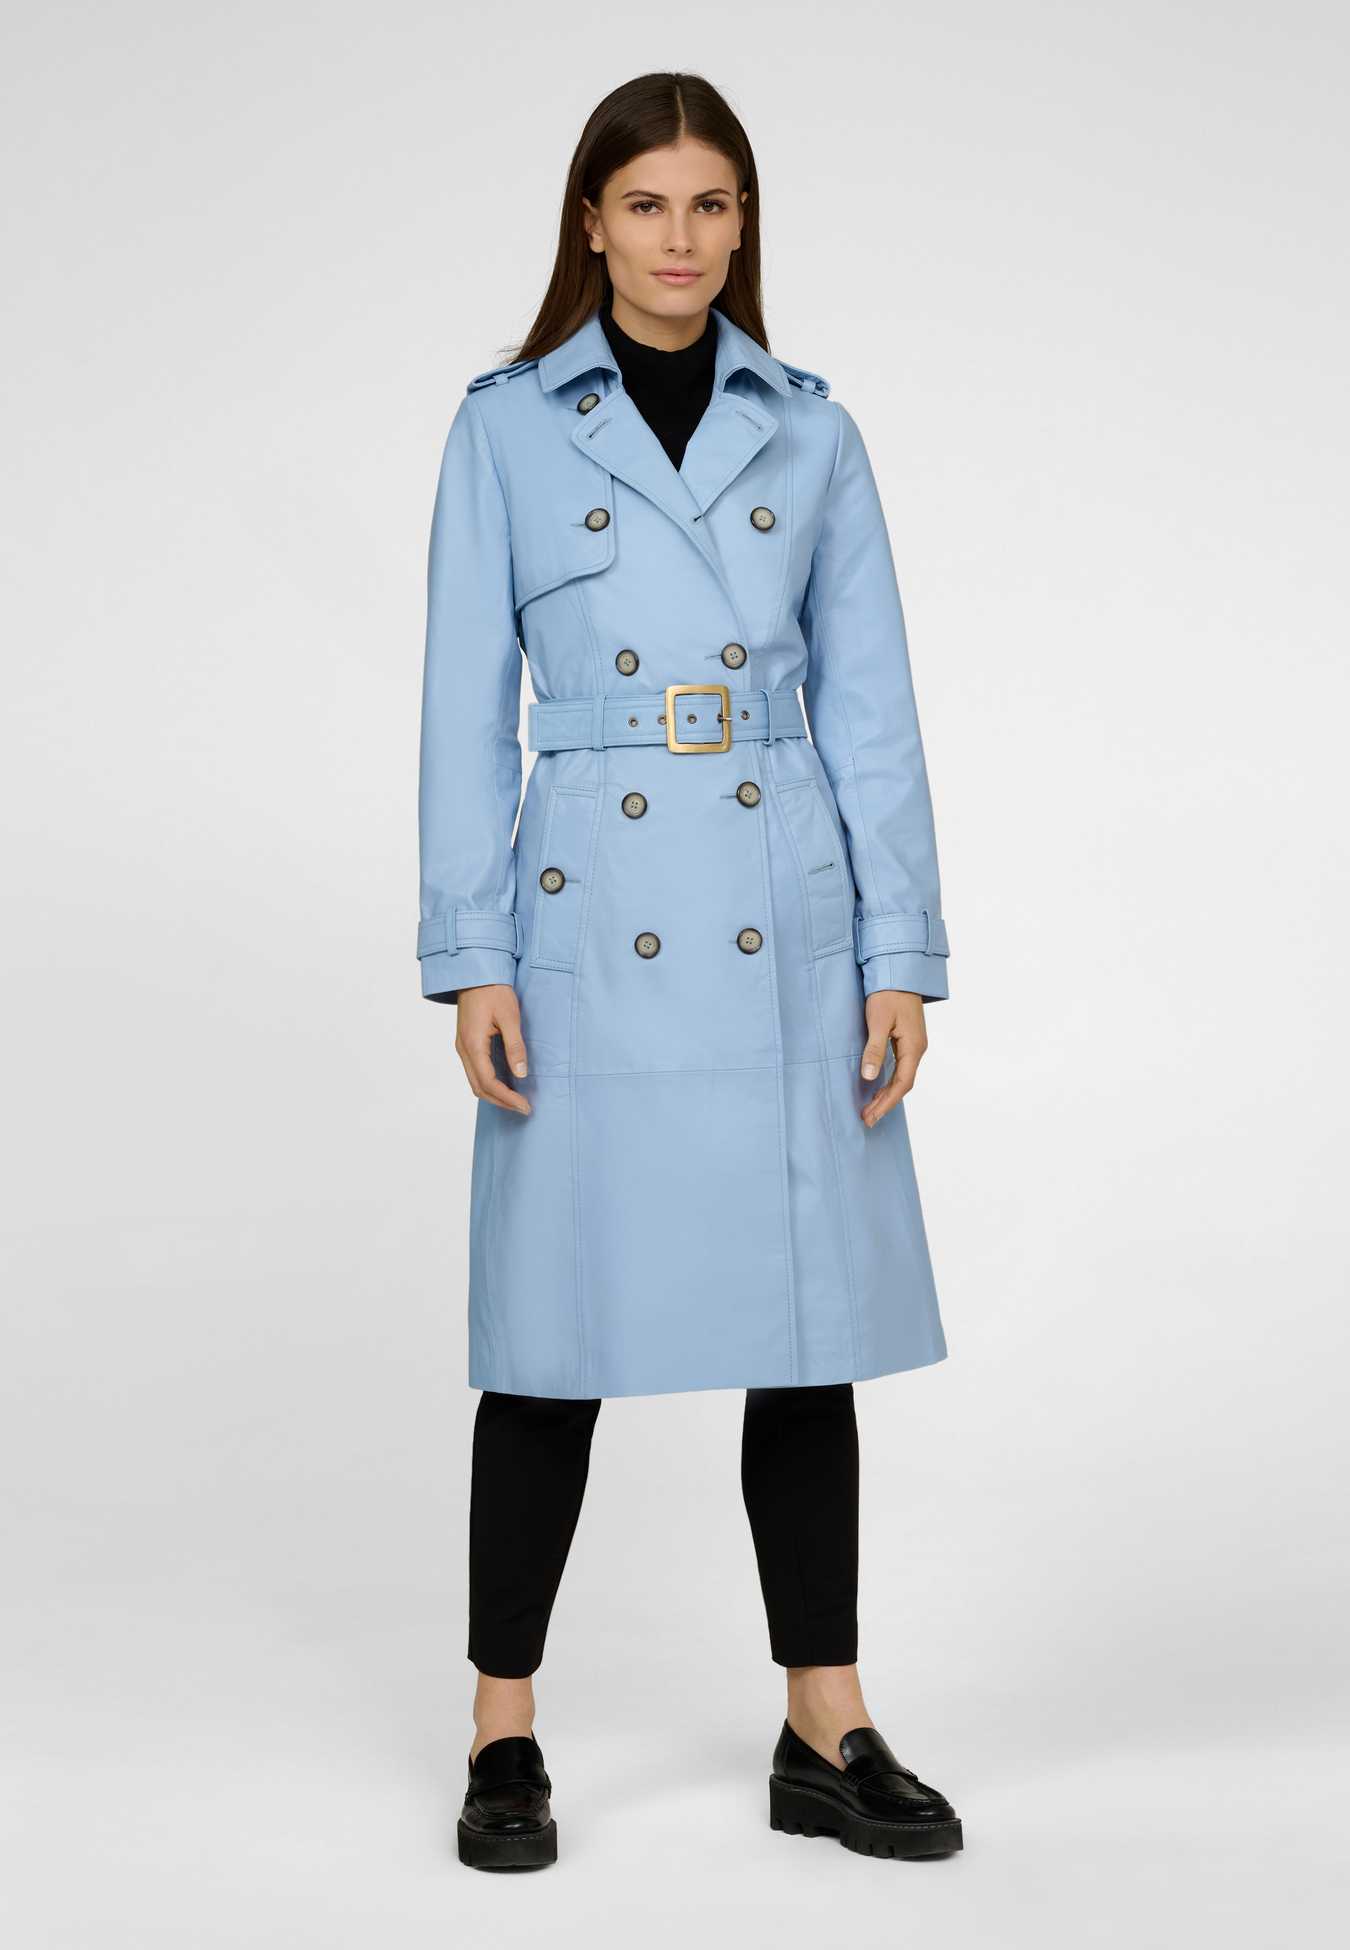 Damen Lederjacke Gloria in Eisblau von Ricano, Frontansicht am Model